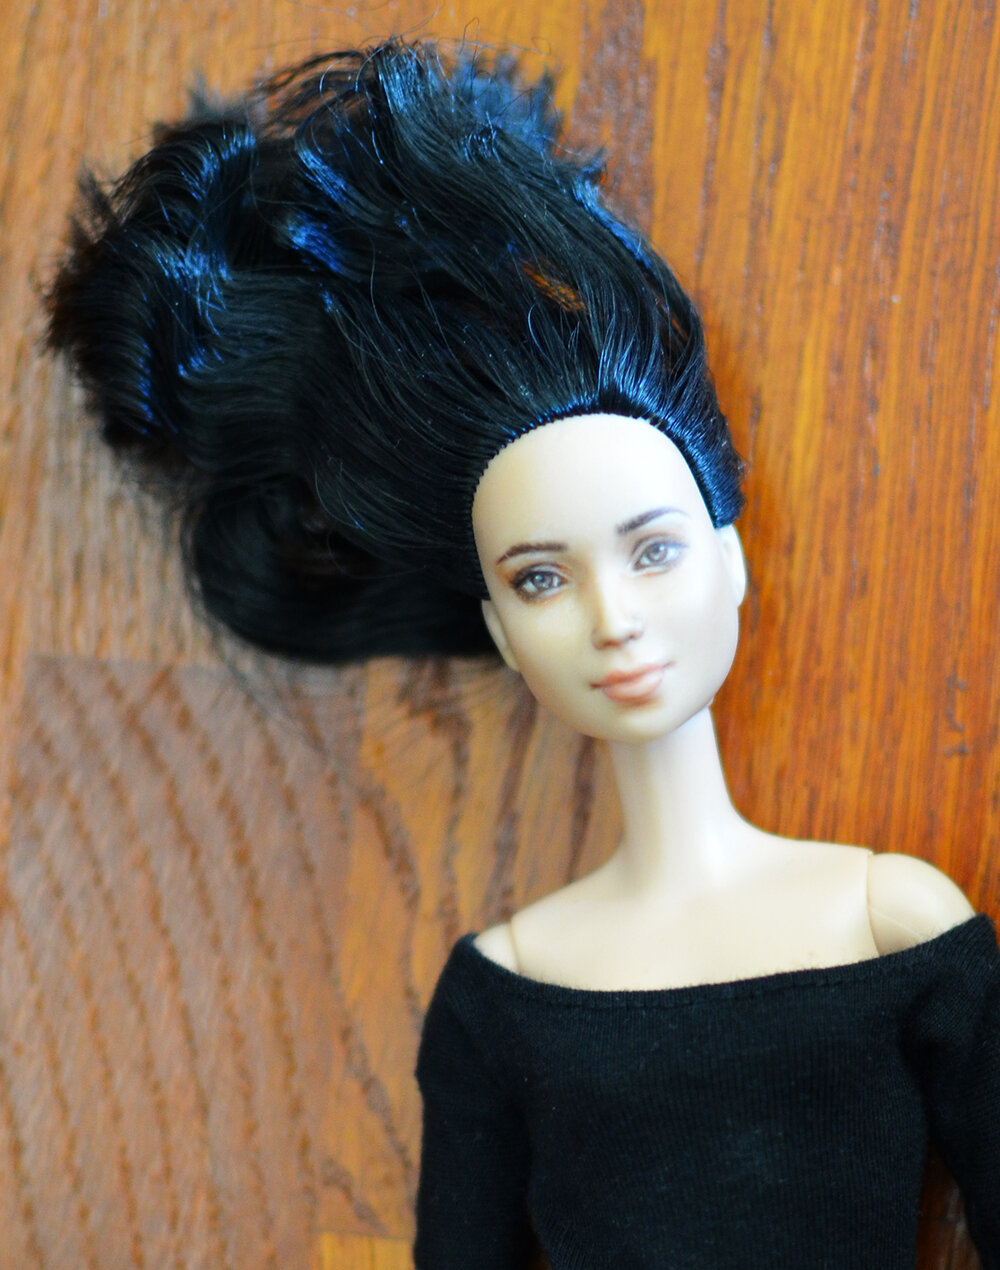 Barbie bald doll head Balding my